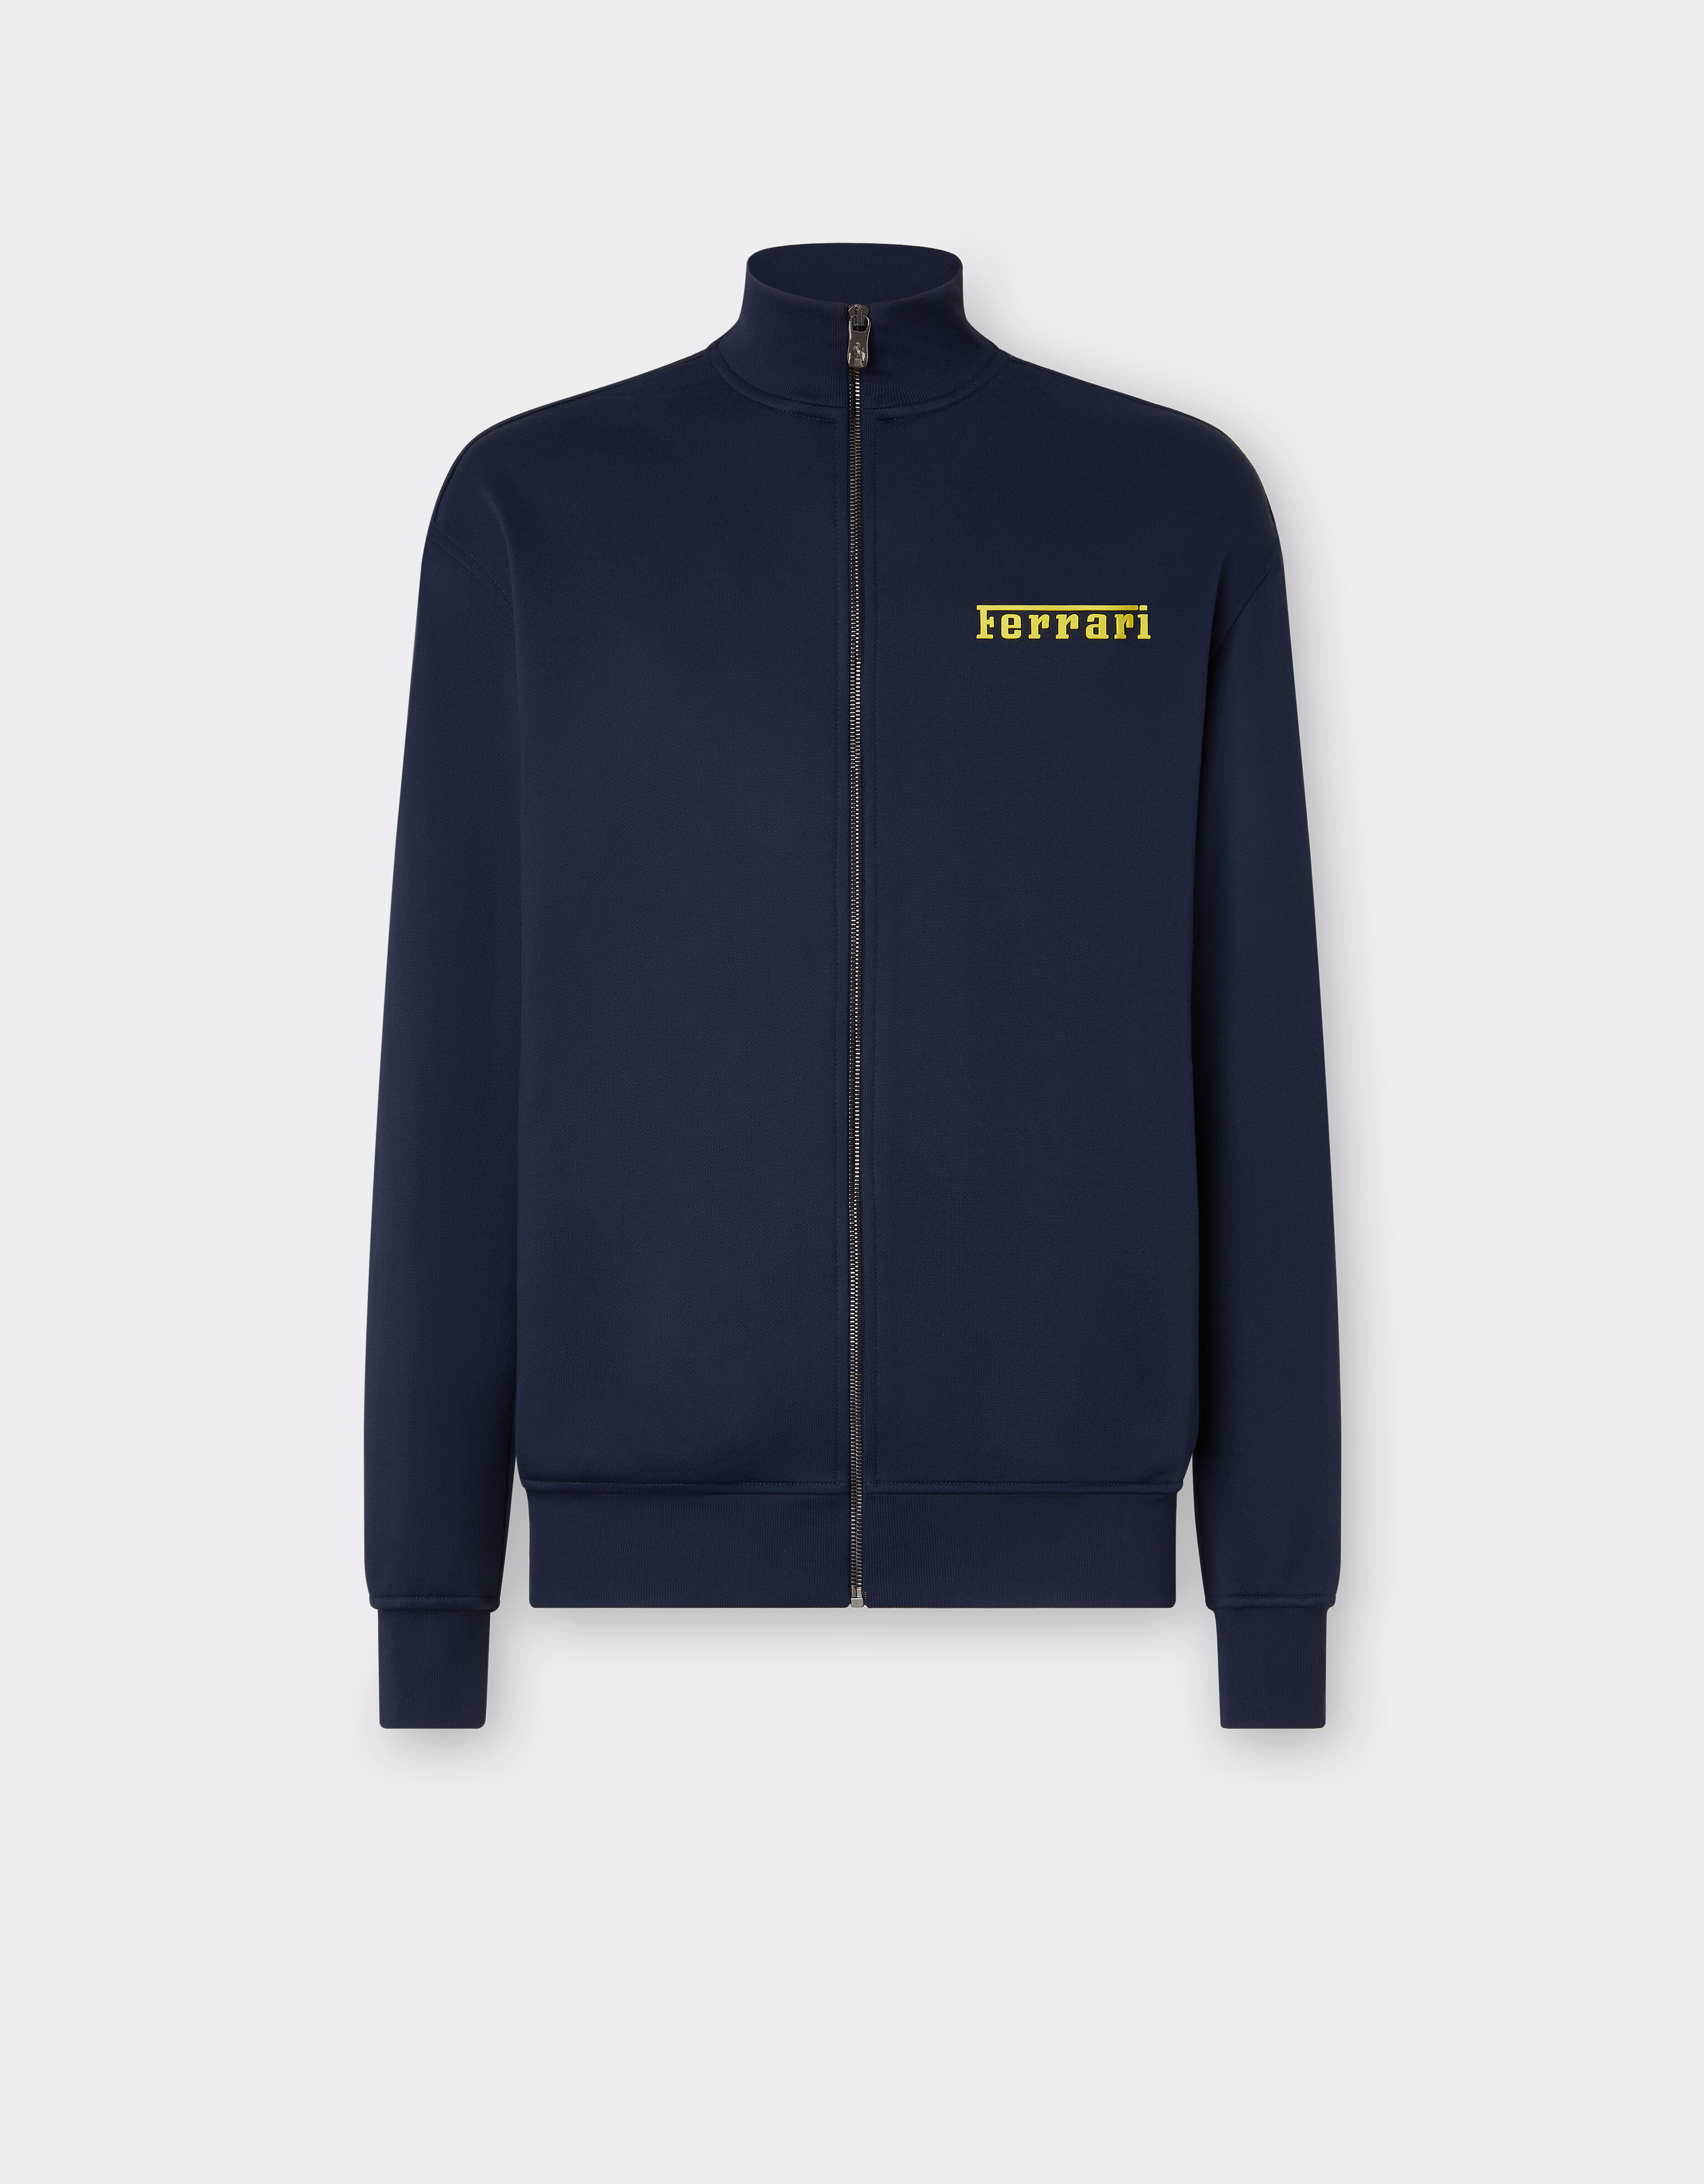 Ferrari Sweatshirt with zip and Ferrari logo Aquamarine 21508f